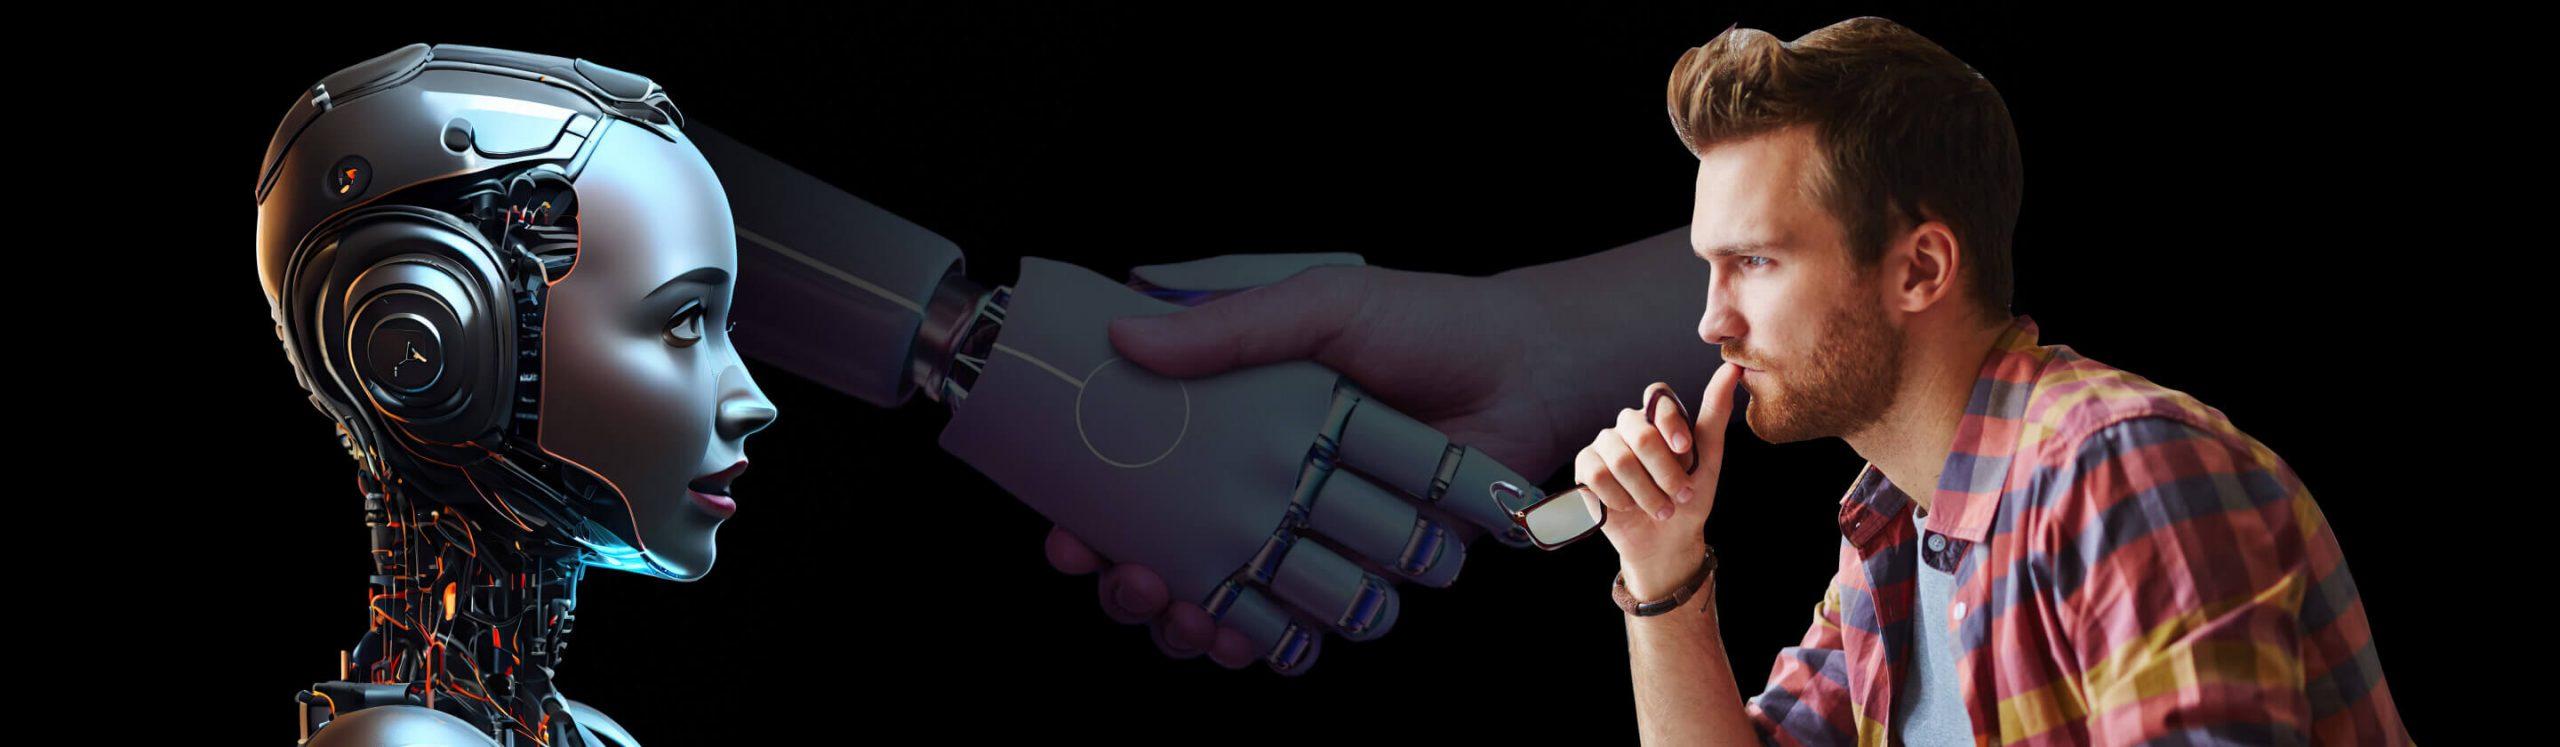 Ai robot & a human designer facing each other